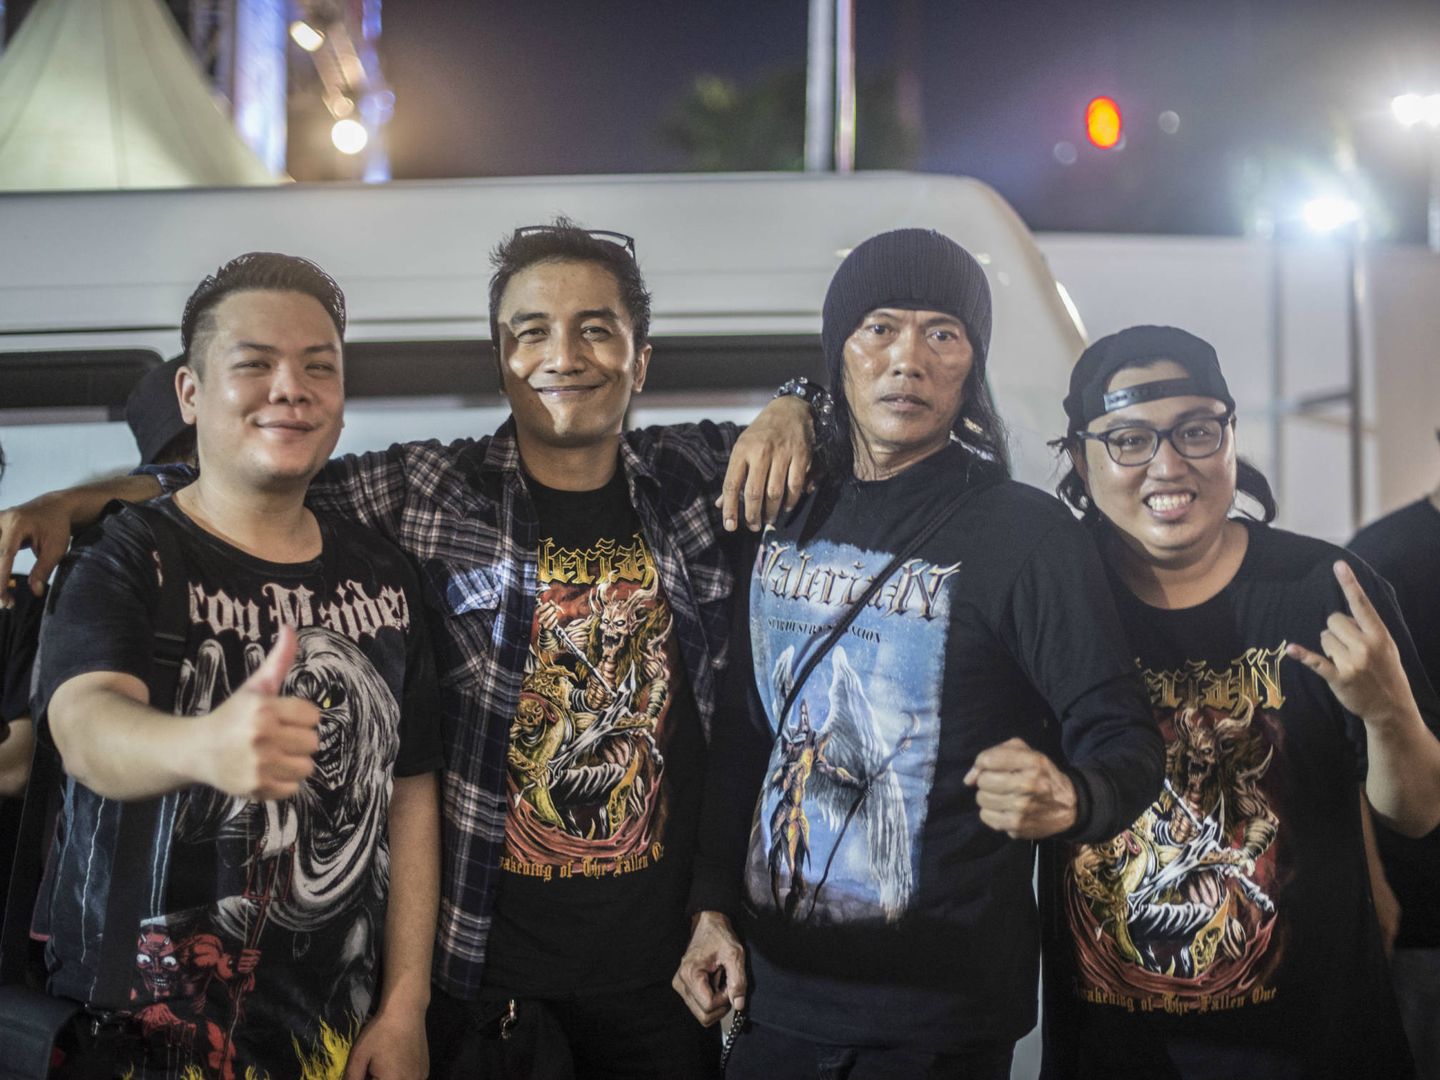 El grupo de Death Metal de Surabaya V.A.L.E.R.I.A.N, tras una actuación en el Gran City Mall de Surabaya, Indonesia (Foto: L.G. Ajofrín).